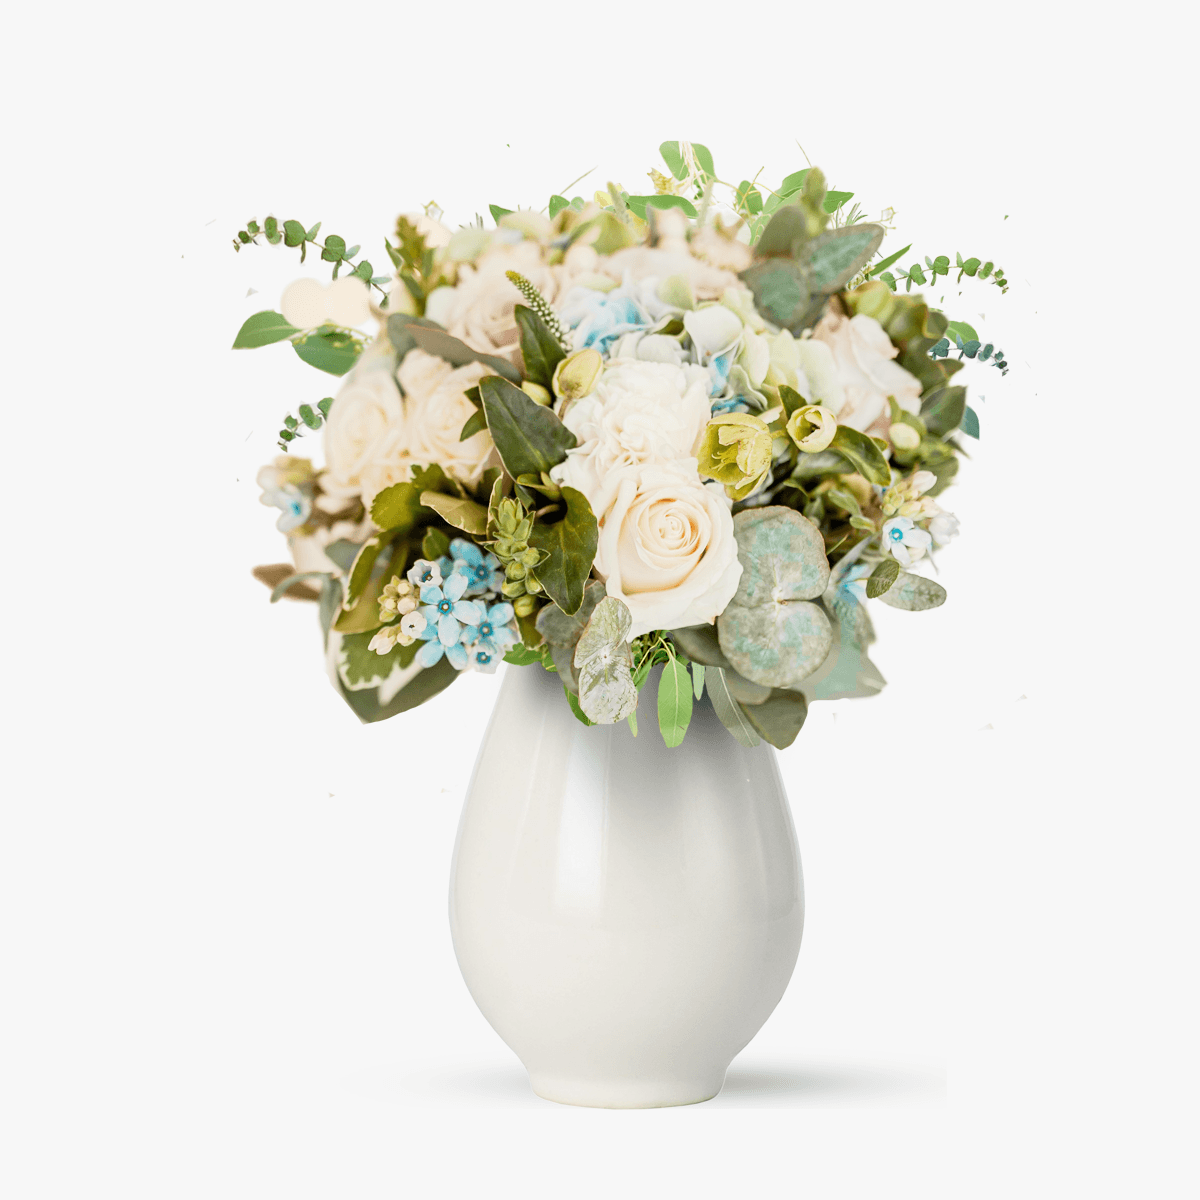 Buchet cu hortensia,trandafiri albi, oxipetalum Aromat